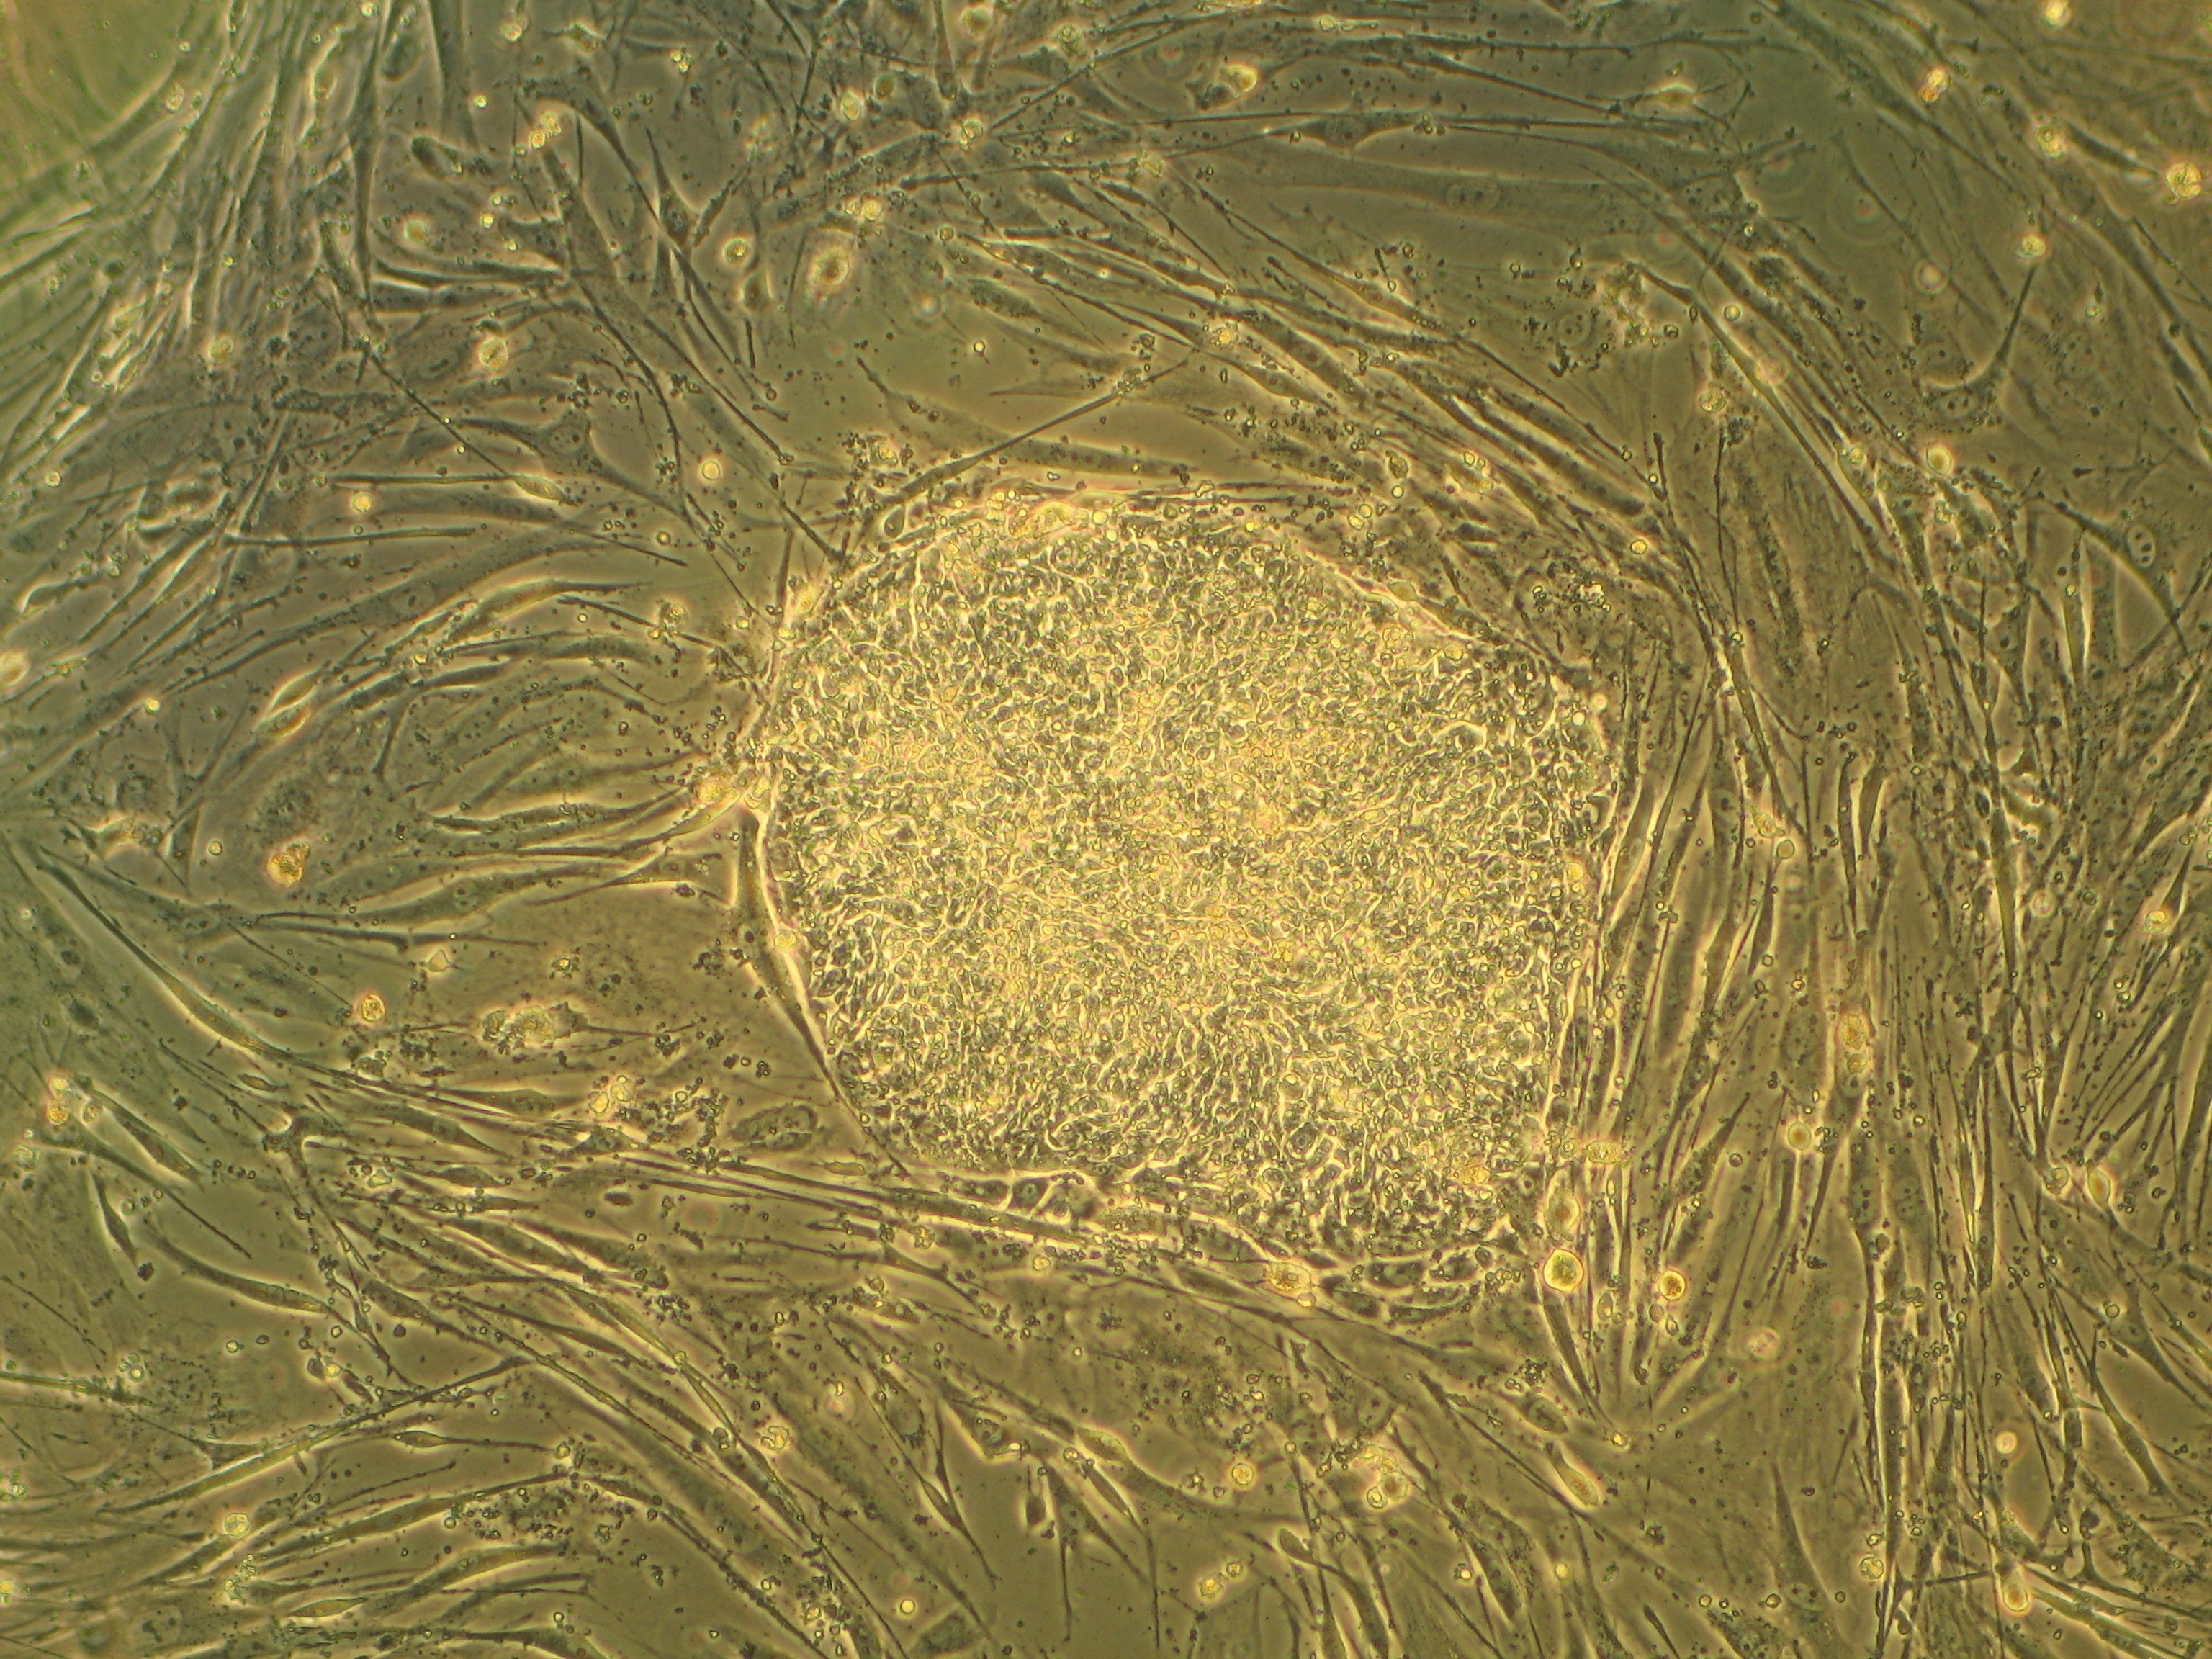  célula-tronco (Foto: wikimedia commons)